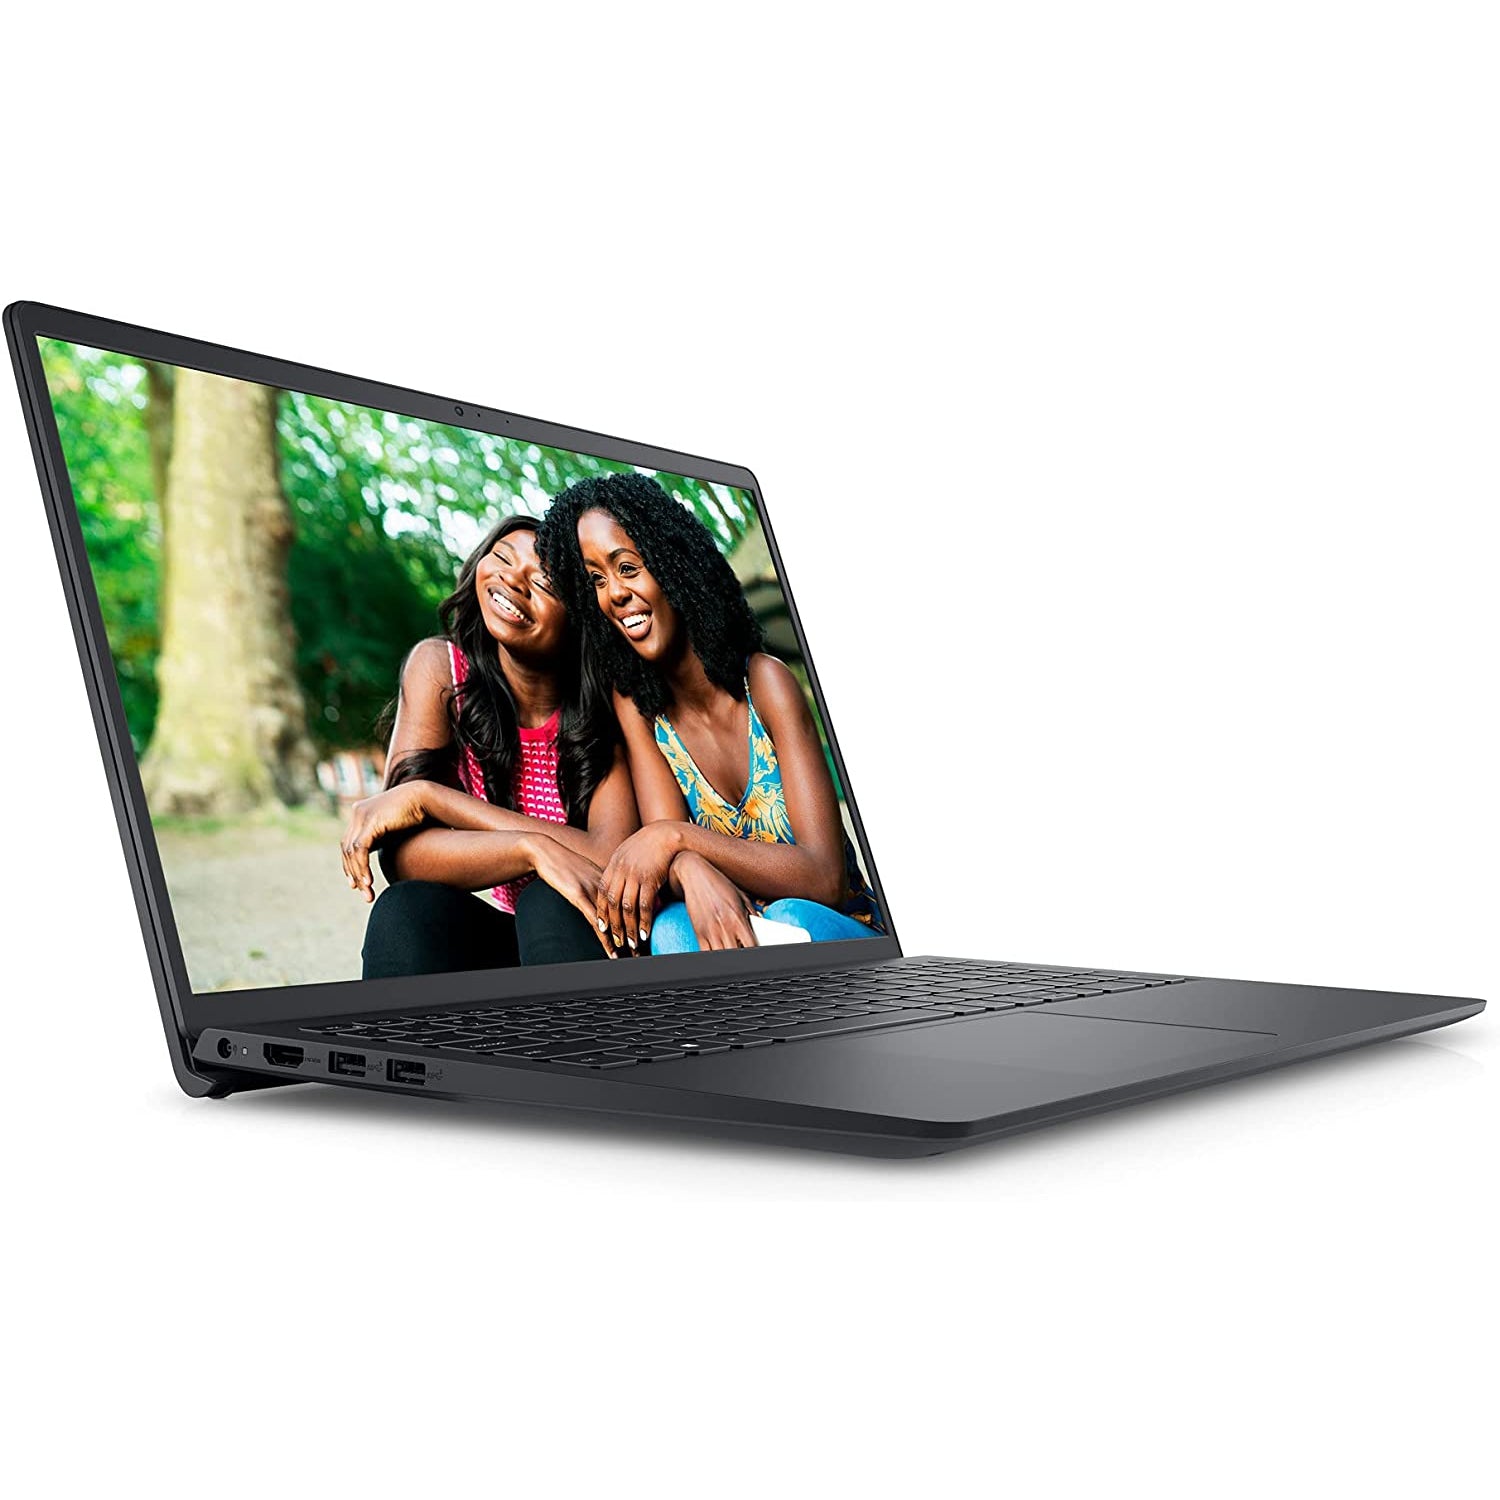 Dell Inspiron 15 3515 Laptop, AMD Ryzen 5, 8GB RAM, 256GB SSD, 15.6", Carbon Black - Refurbished Excellent